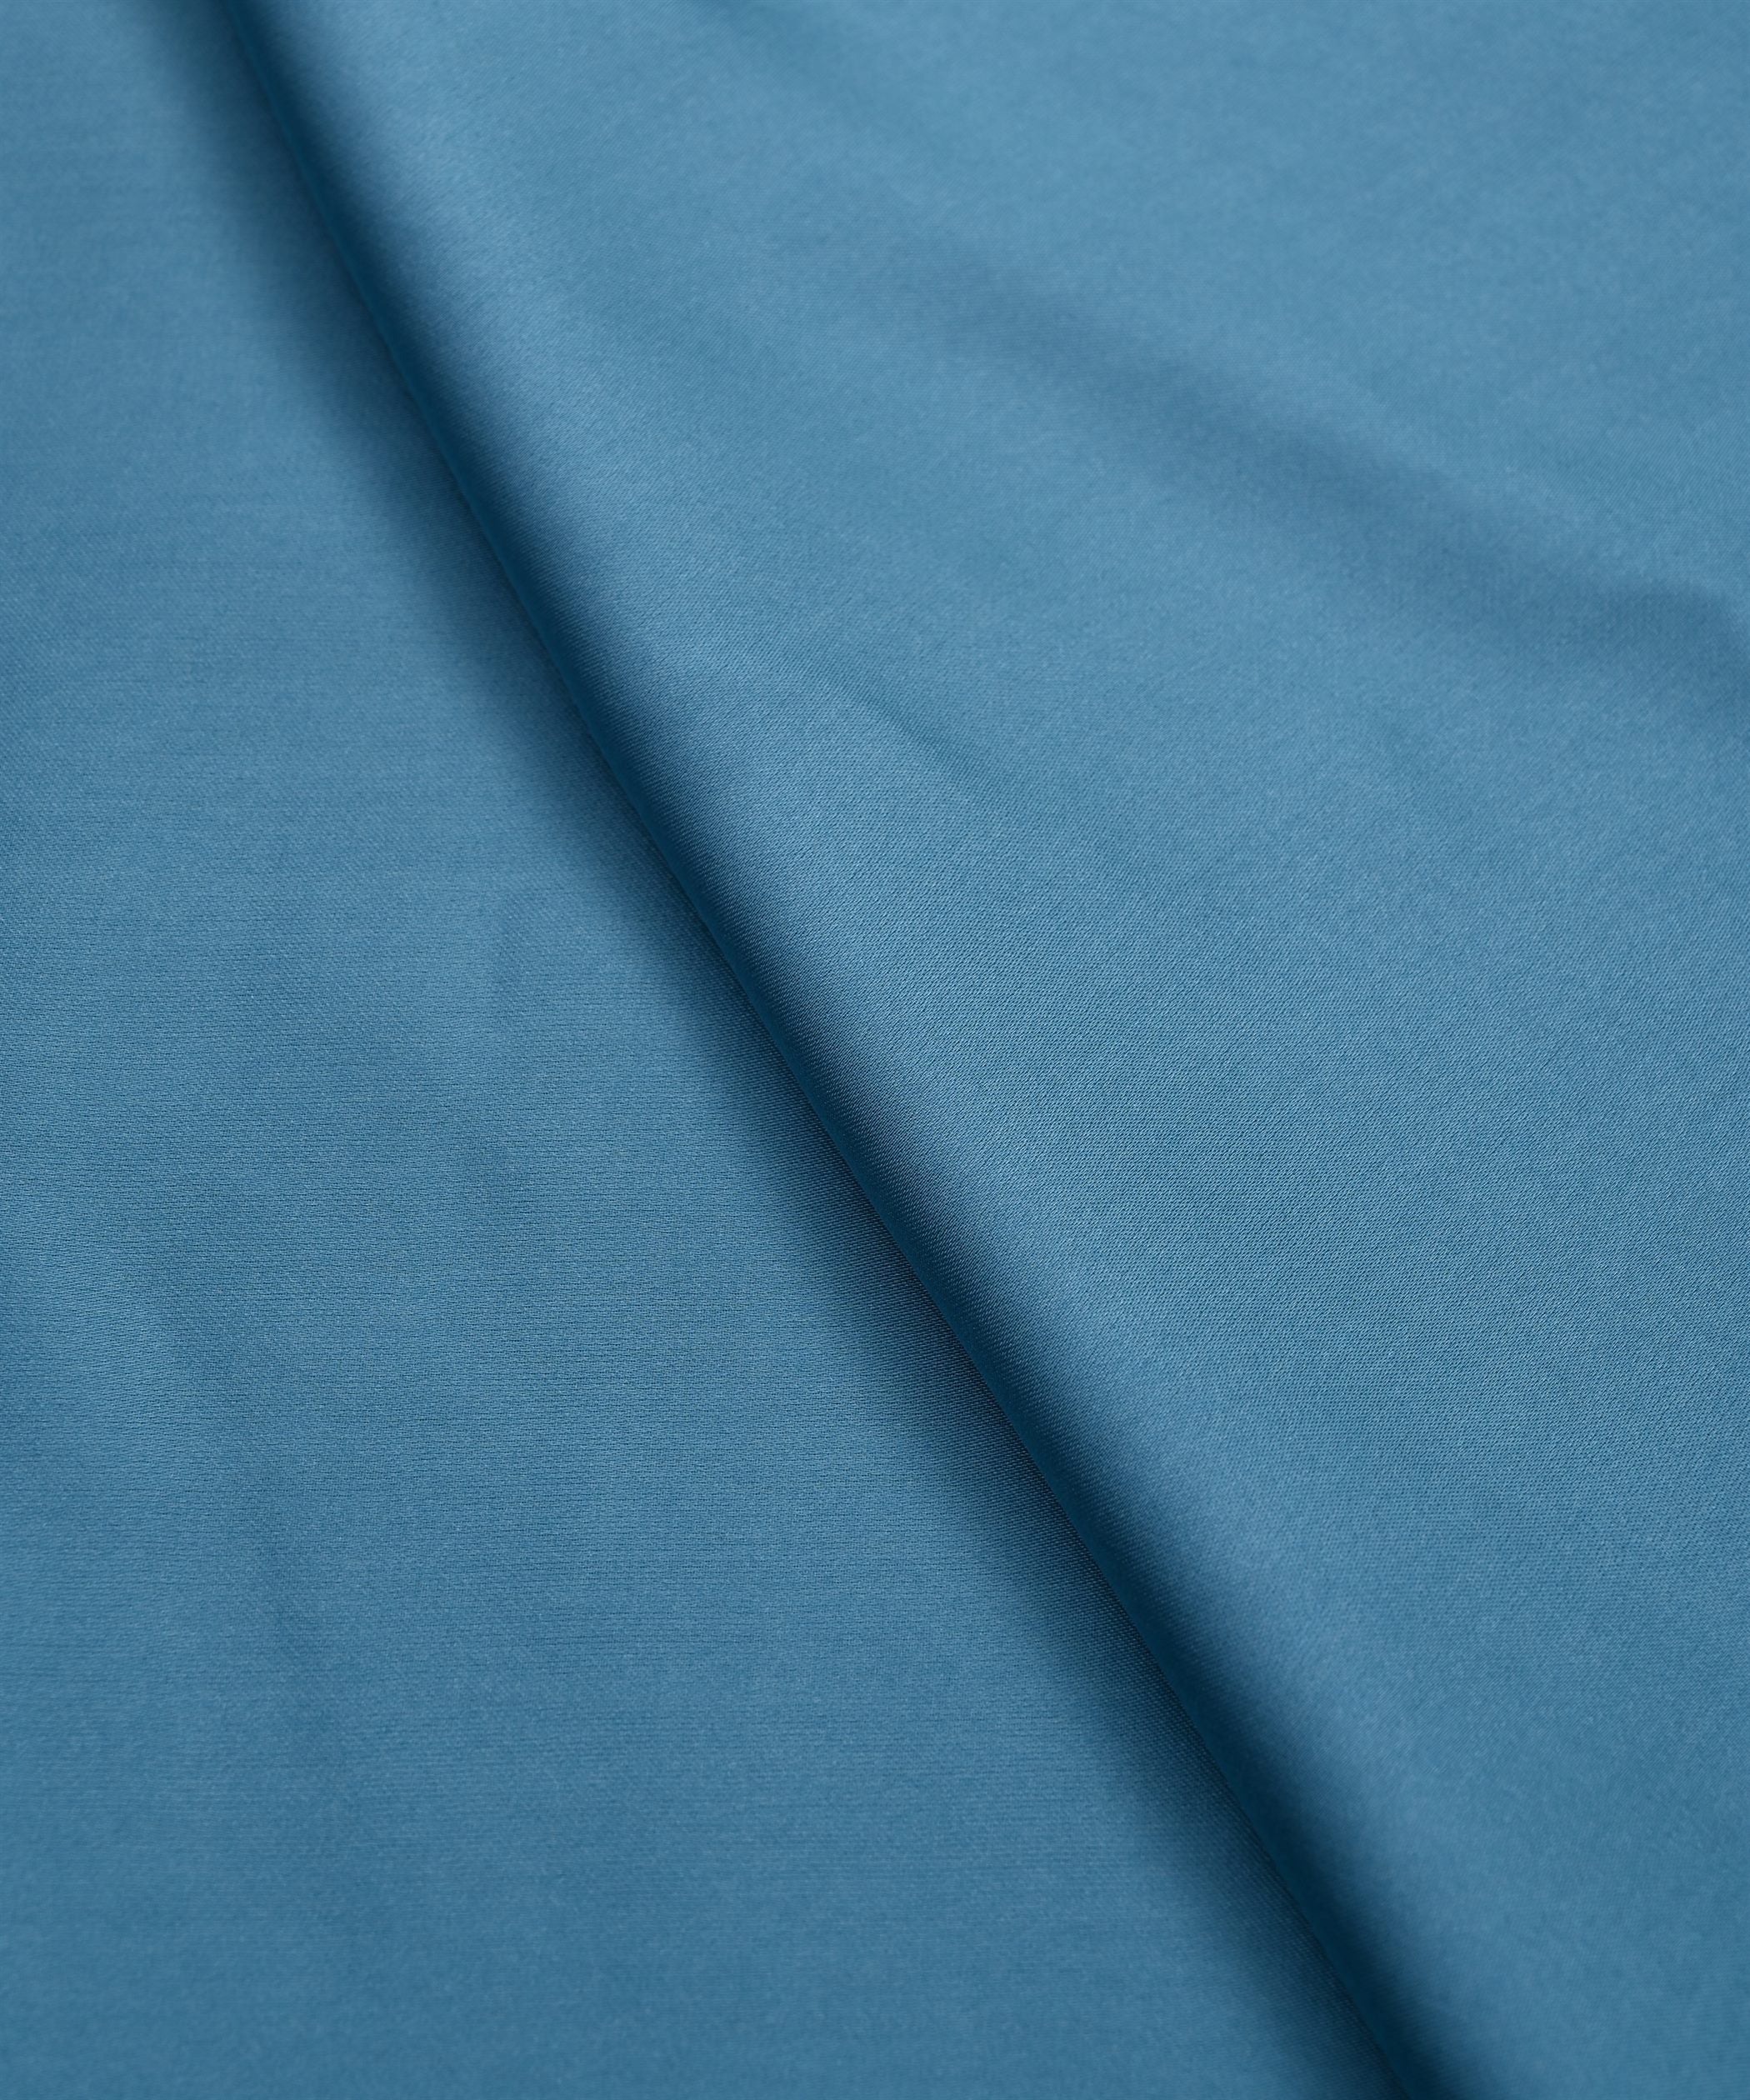 Aqua Blue Ombre Shaded Satin Georgette Fabric